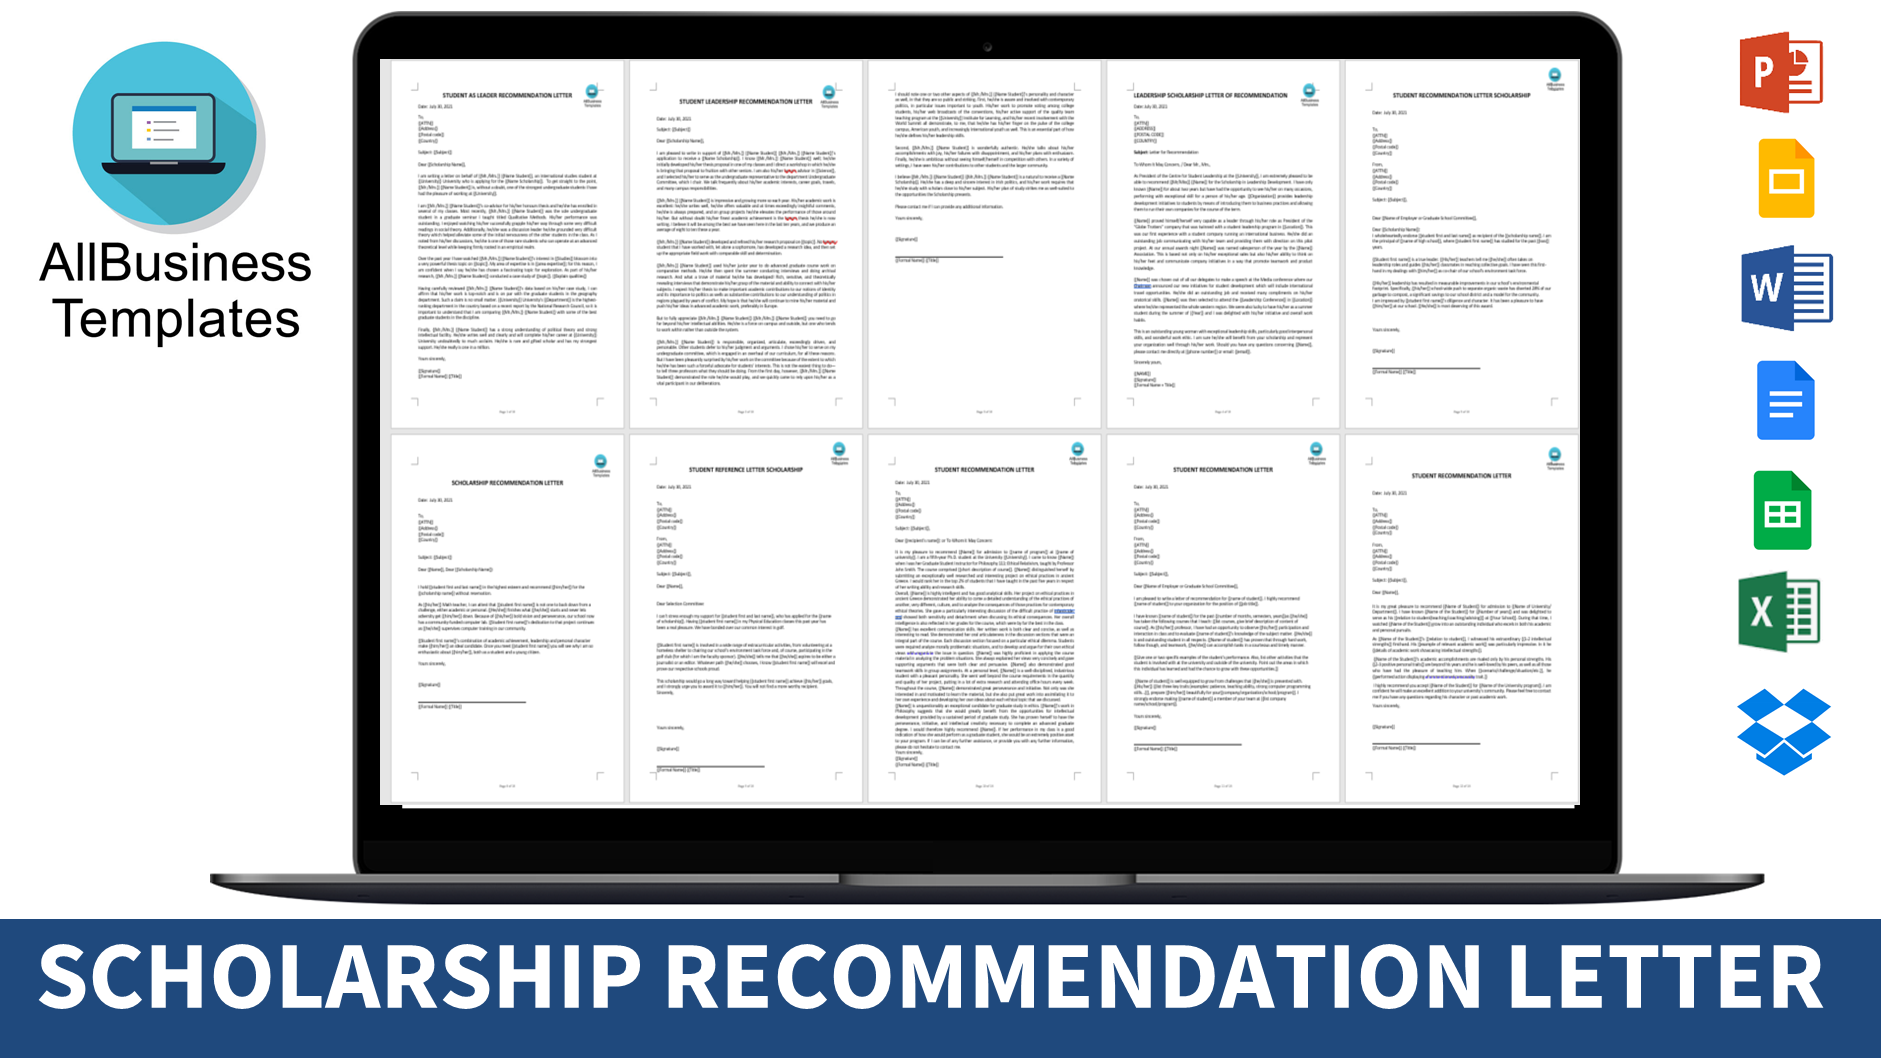 Recommendation Letter For University Application from www.allbusinesstemplates.com